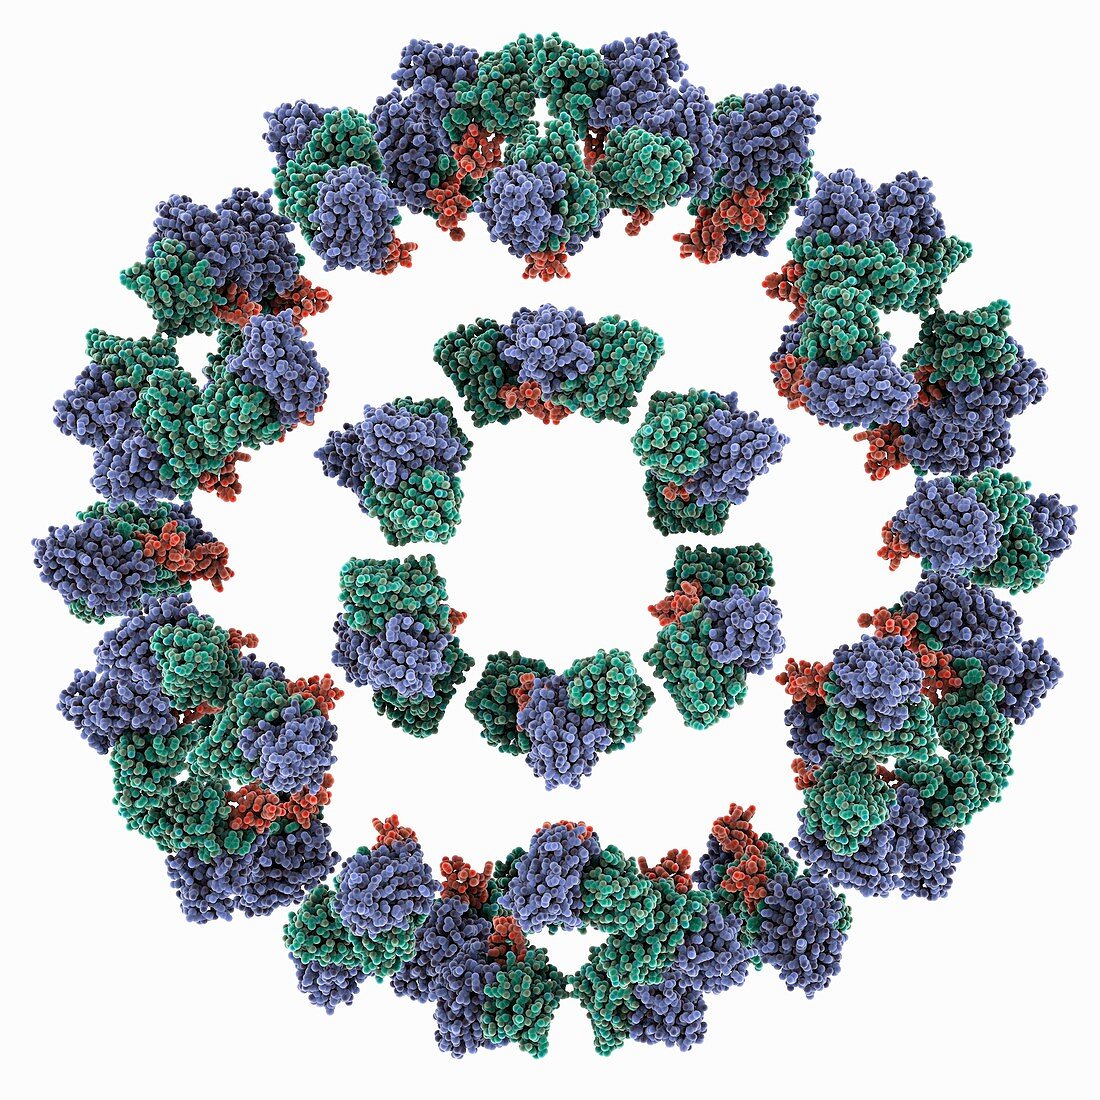 Human enterovirus virion complex